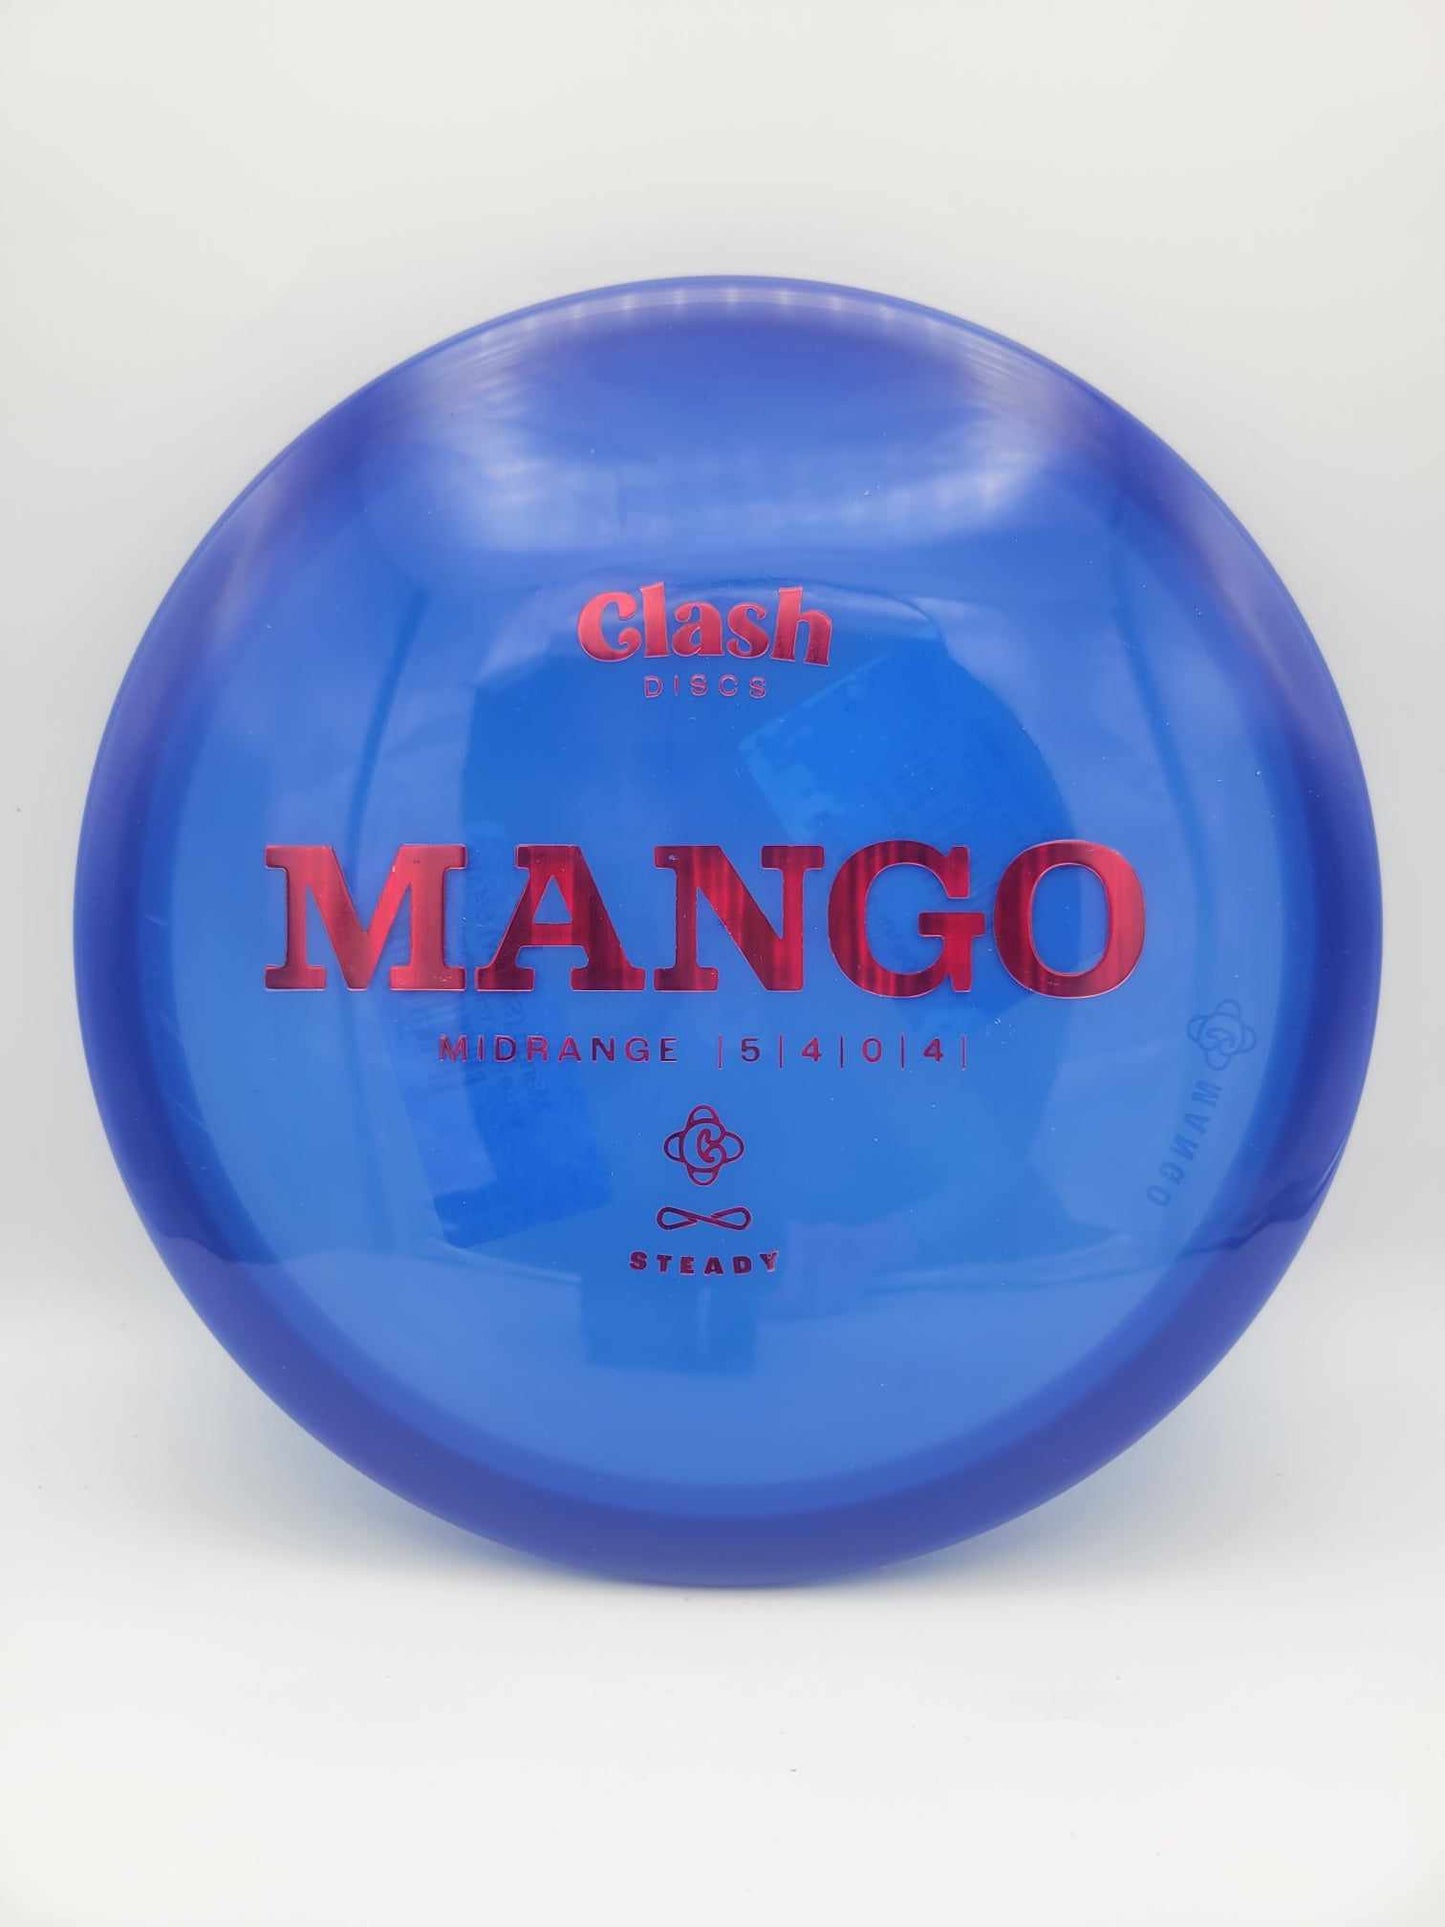 Mango (Steady) 5/4/0/4